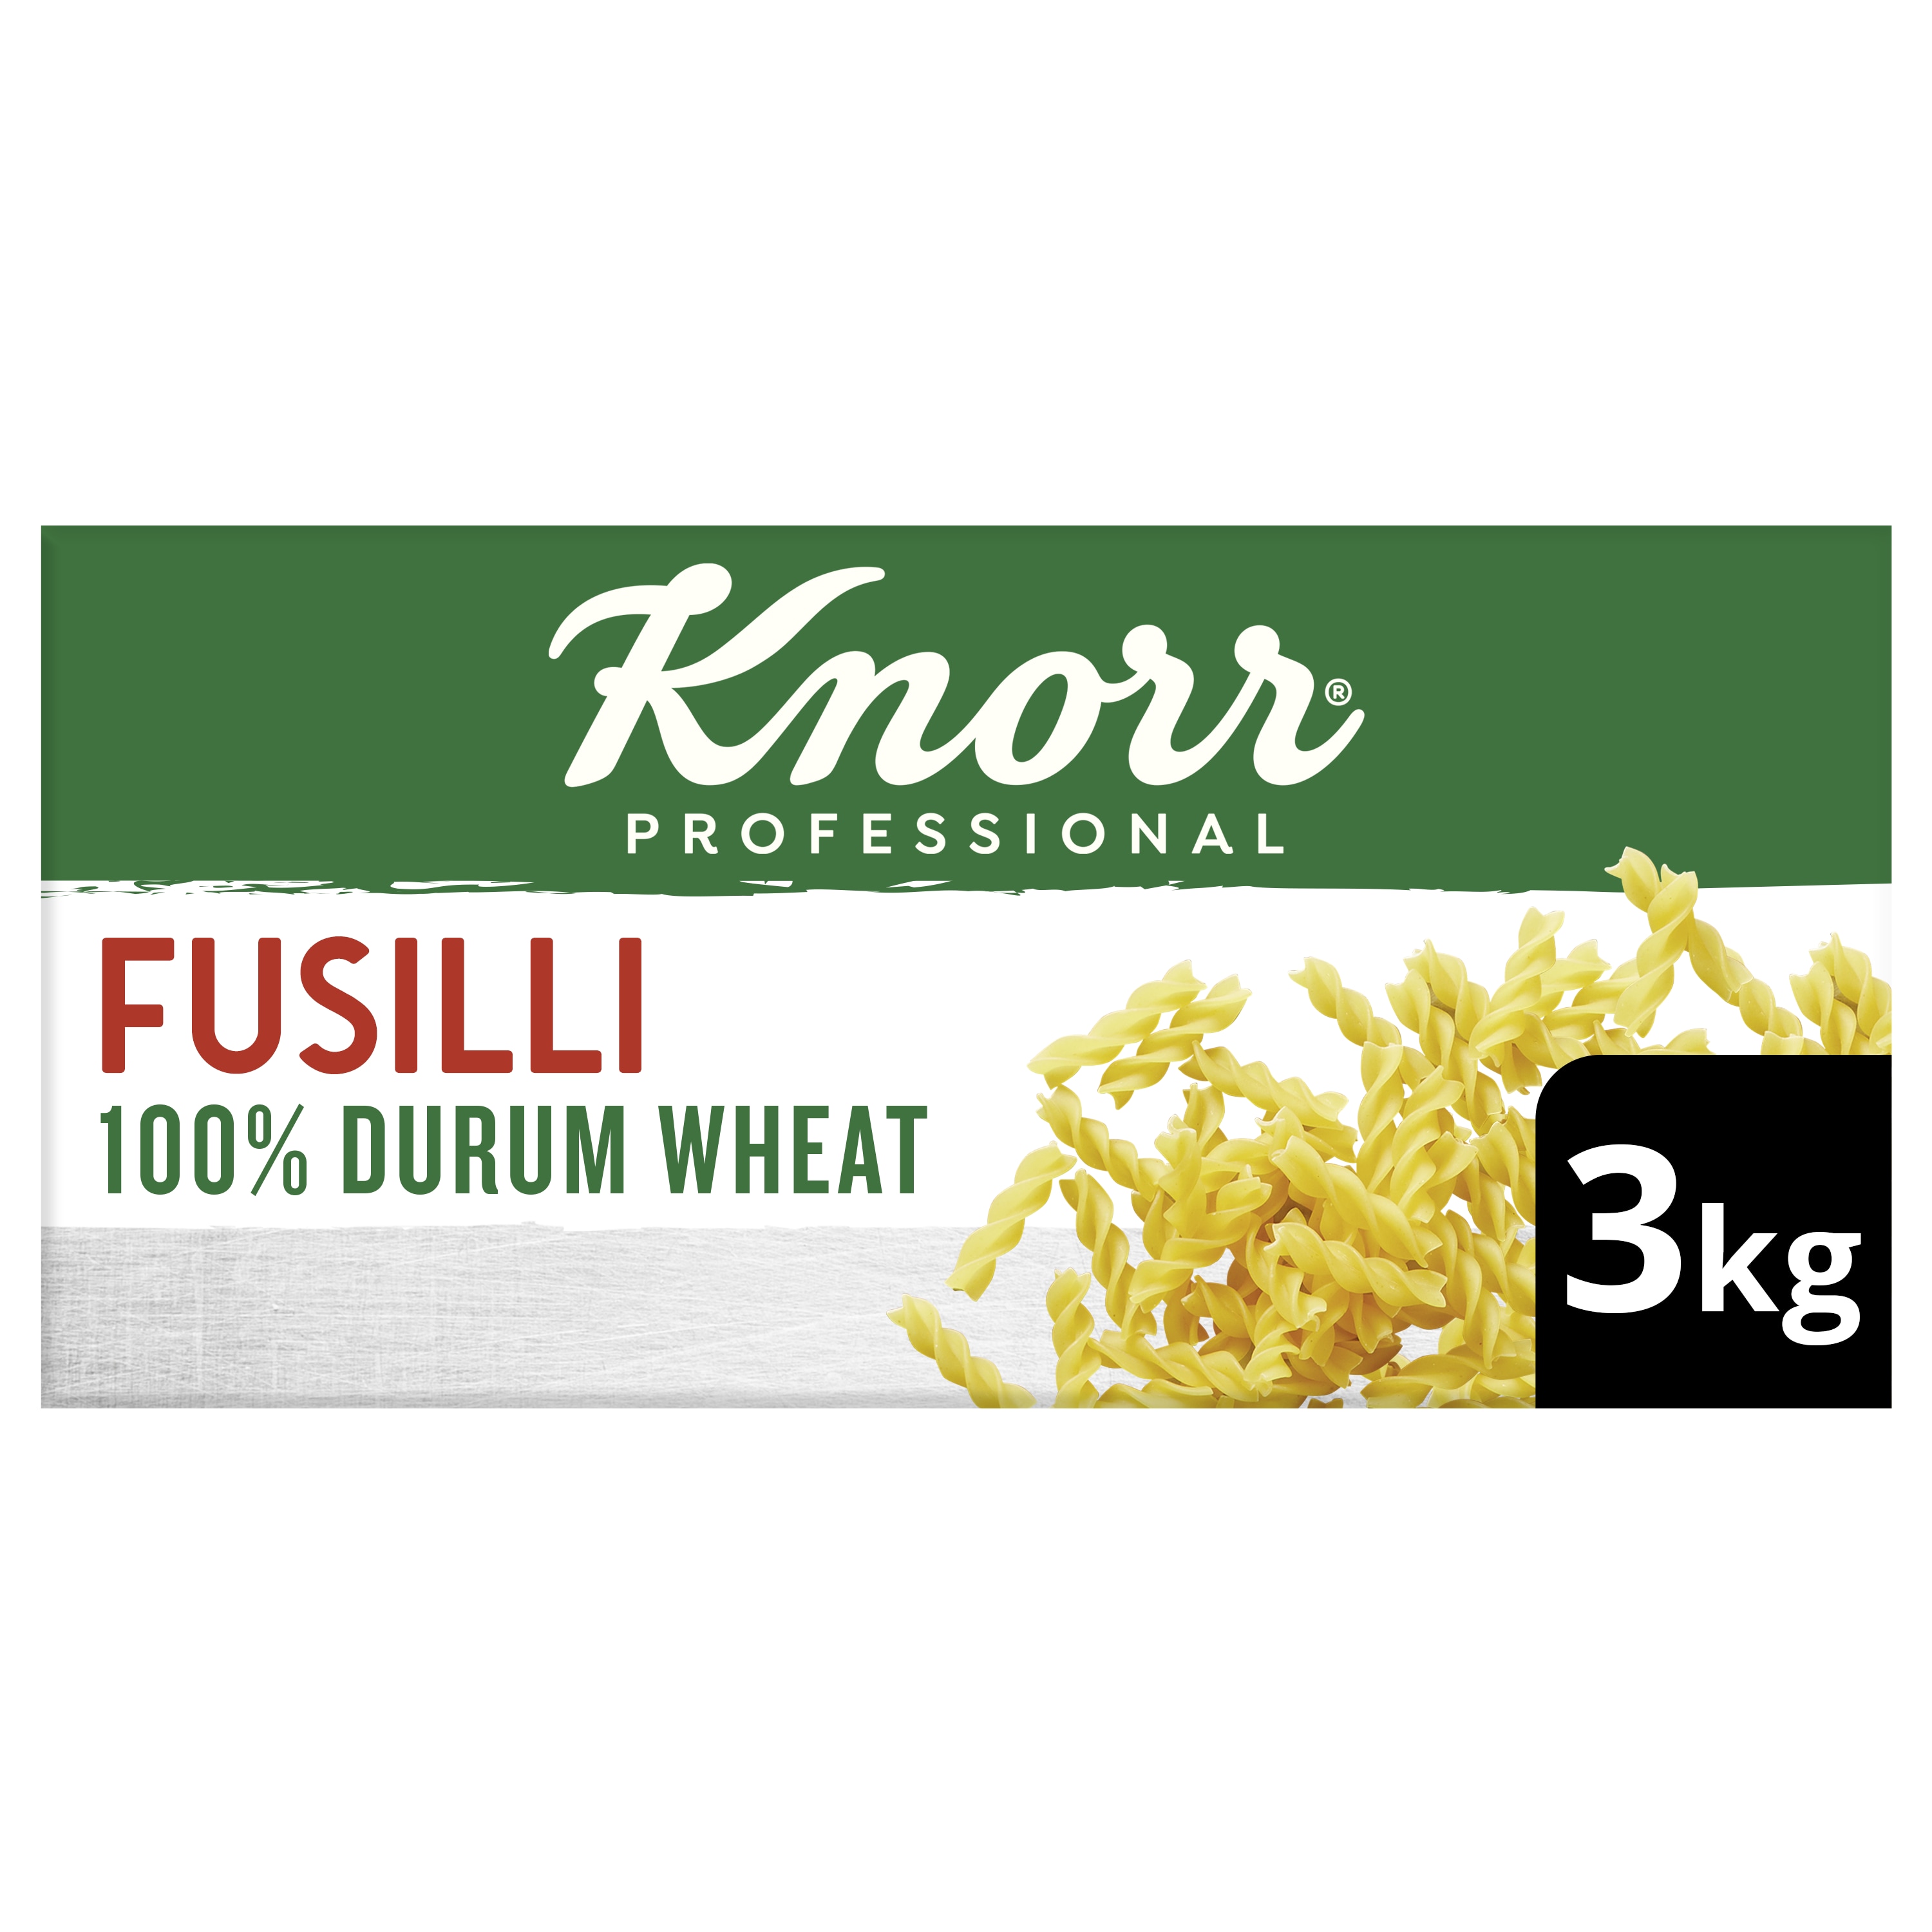 Knorr Professional Italiana Fusilli 3kg - 